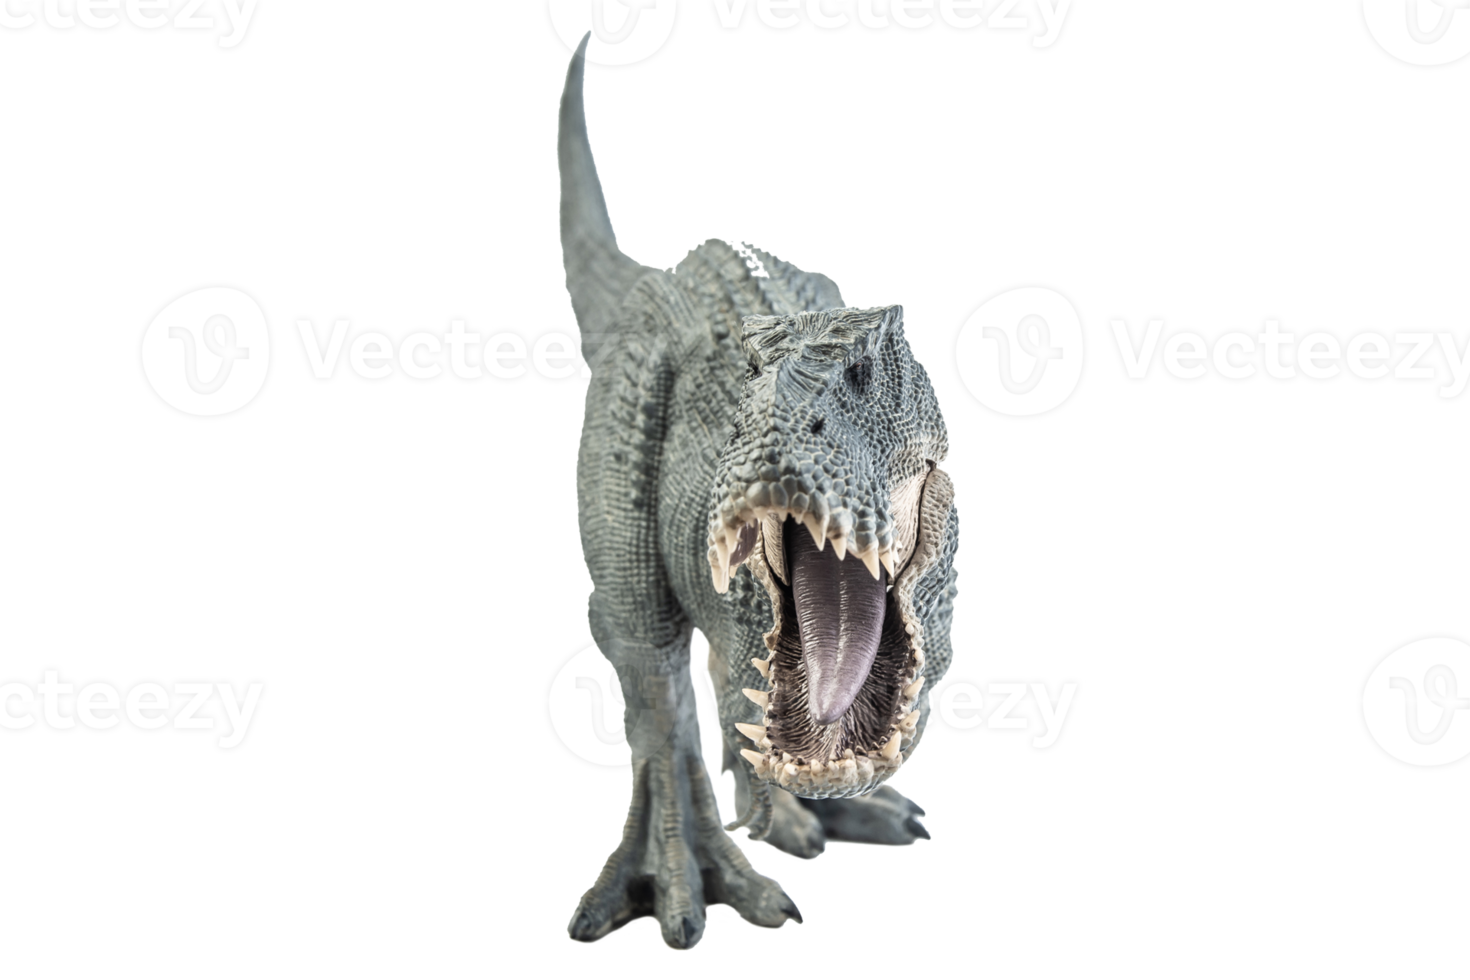 tyrannosaurus t-rex, dinosaurus op witte achtergrond png